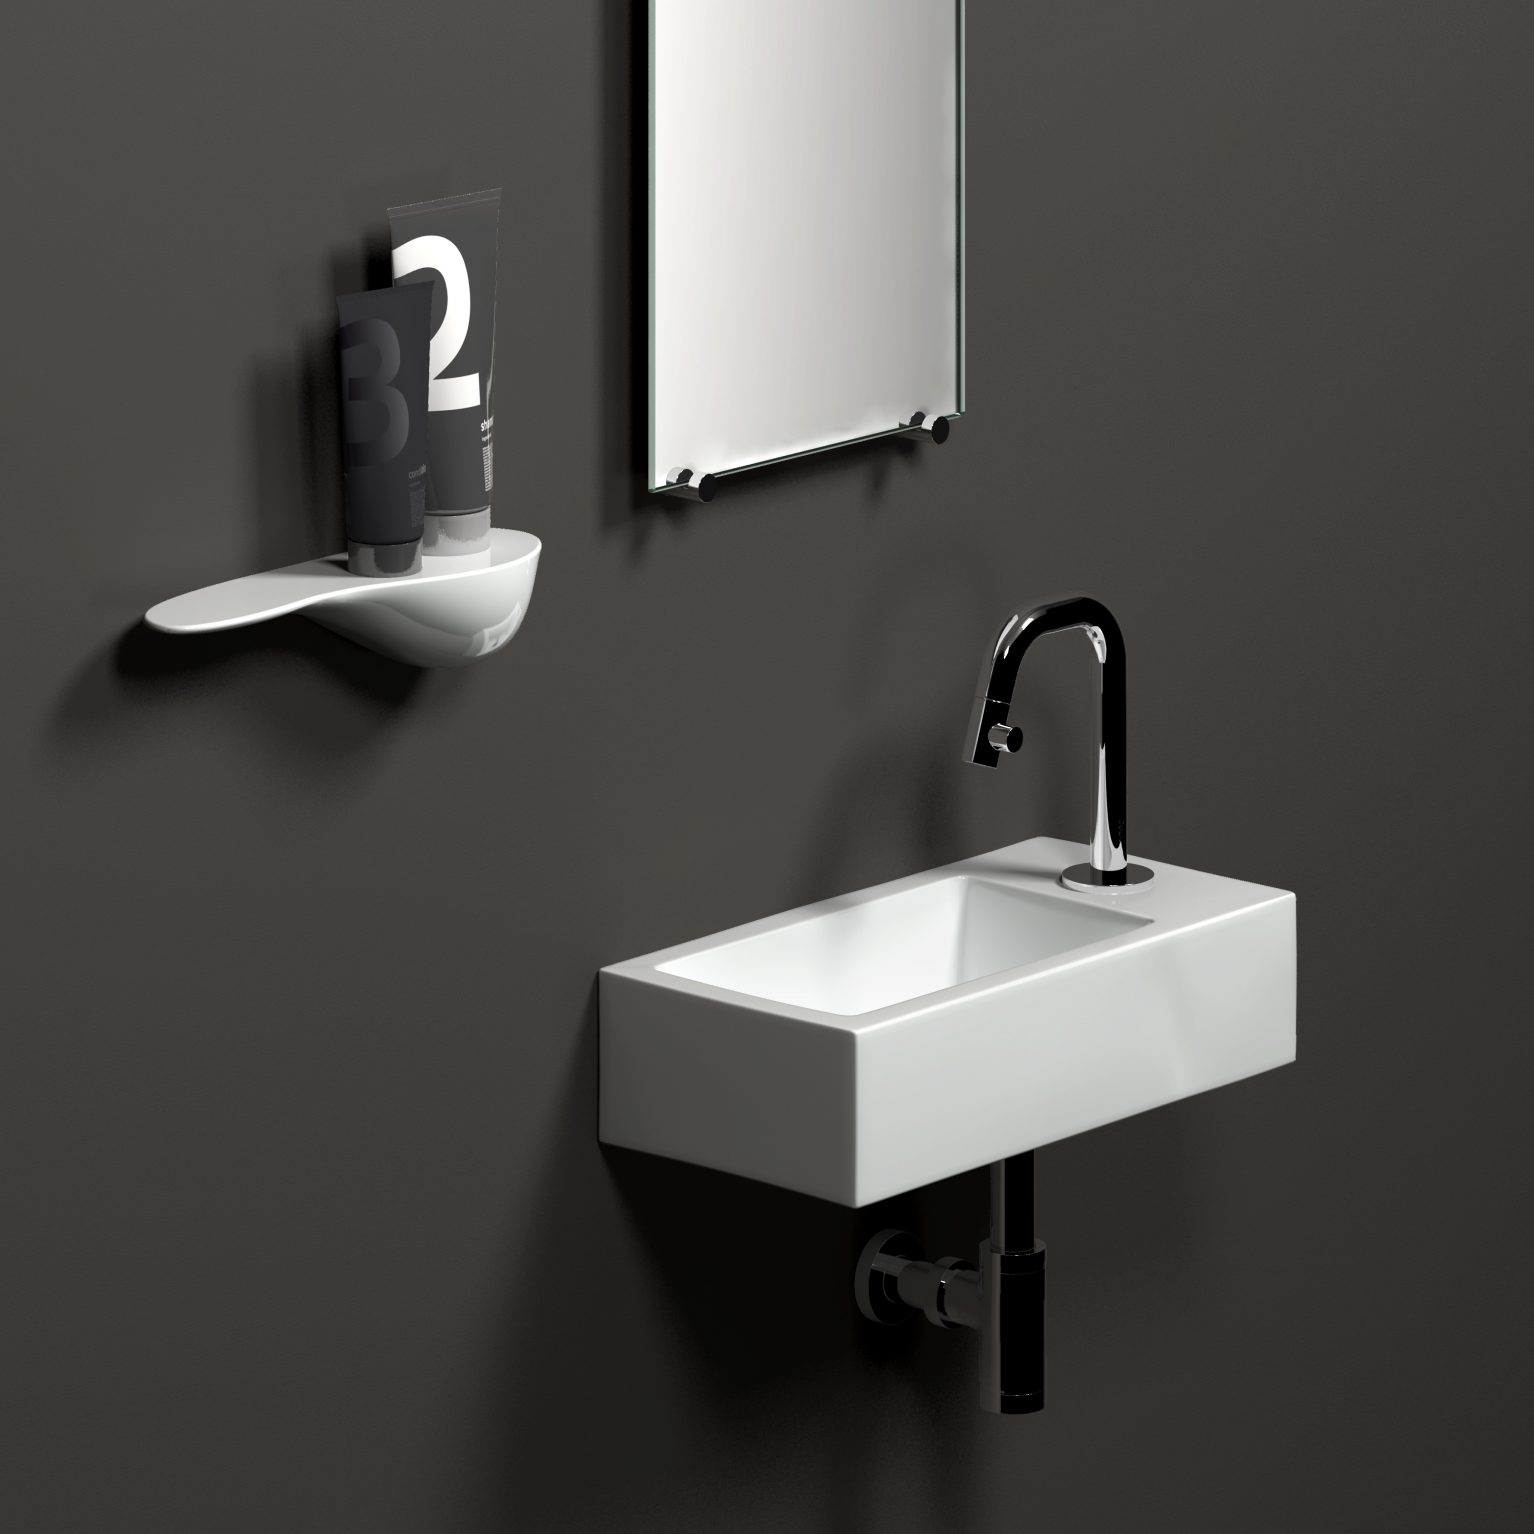 wastafel-kraan-chroom-toilet-badkamer-luxe-sanitair-Kaldur-rechts-clou-CL060500429R-wasbakje-fontein-kraan-kort-sifon-Cliff-planchet-plankje